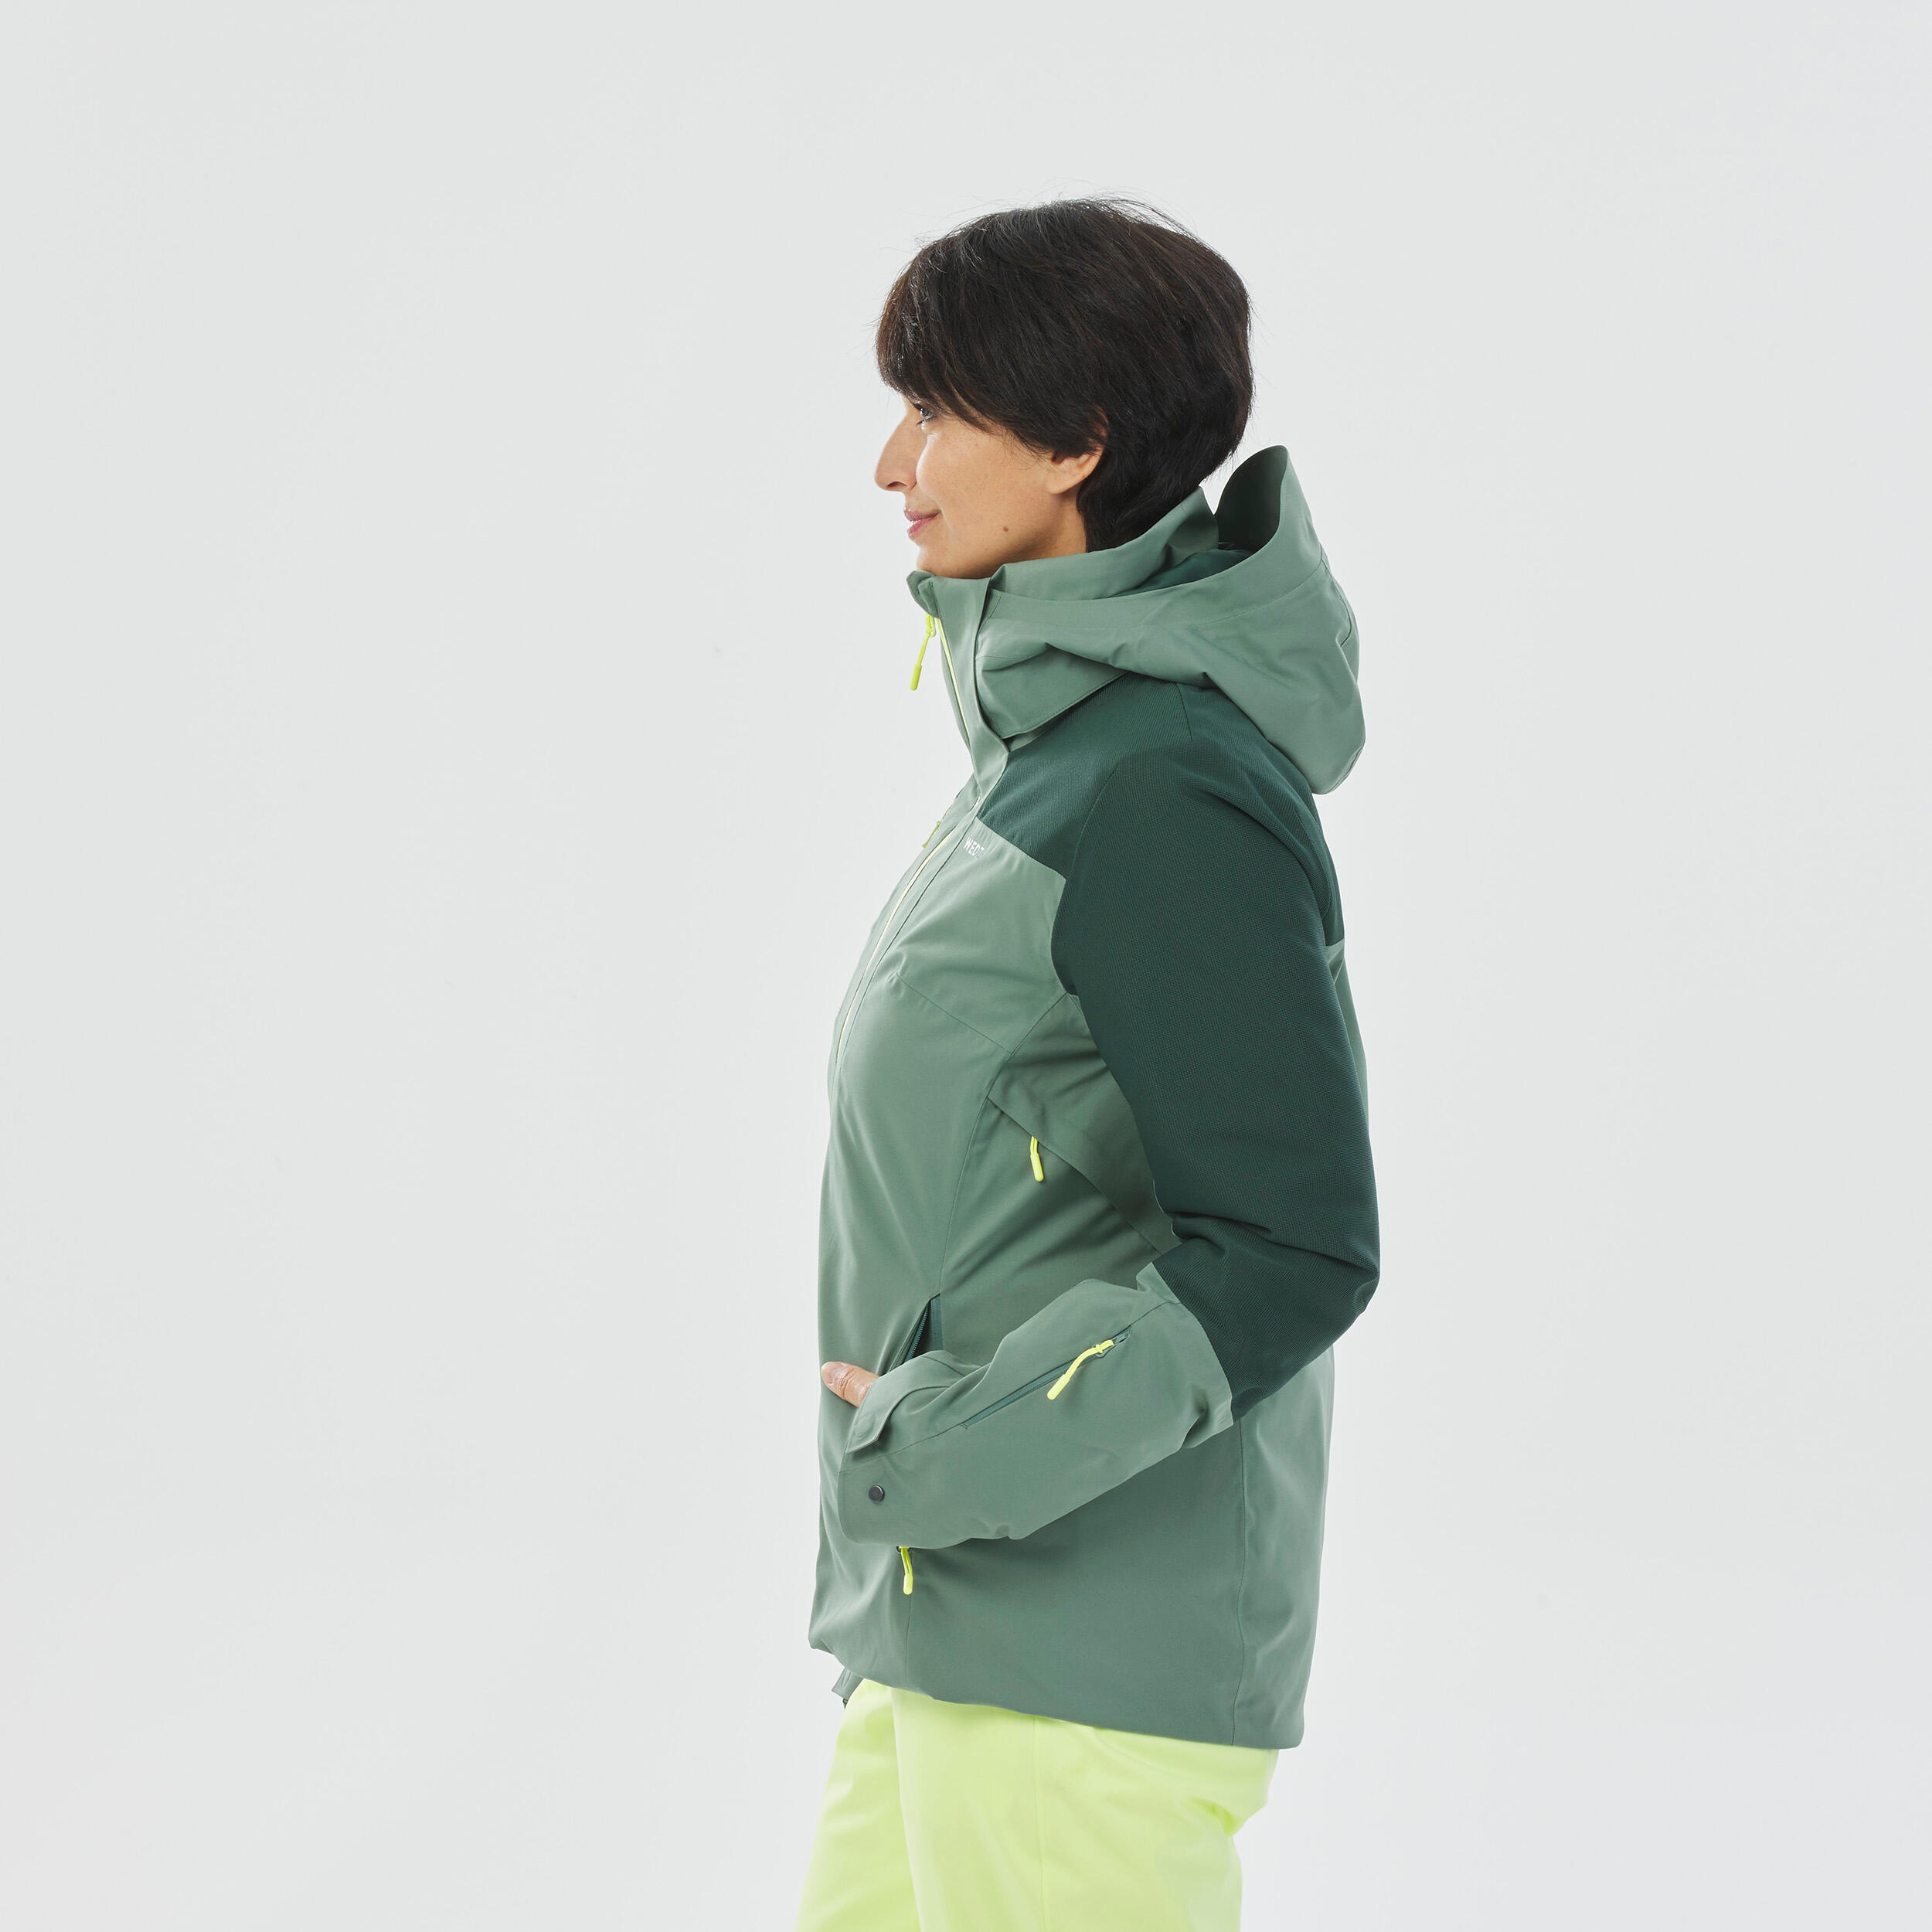 Women’s Ski Jacket - 500 sport - Green 4/13